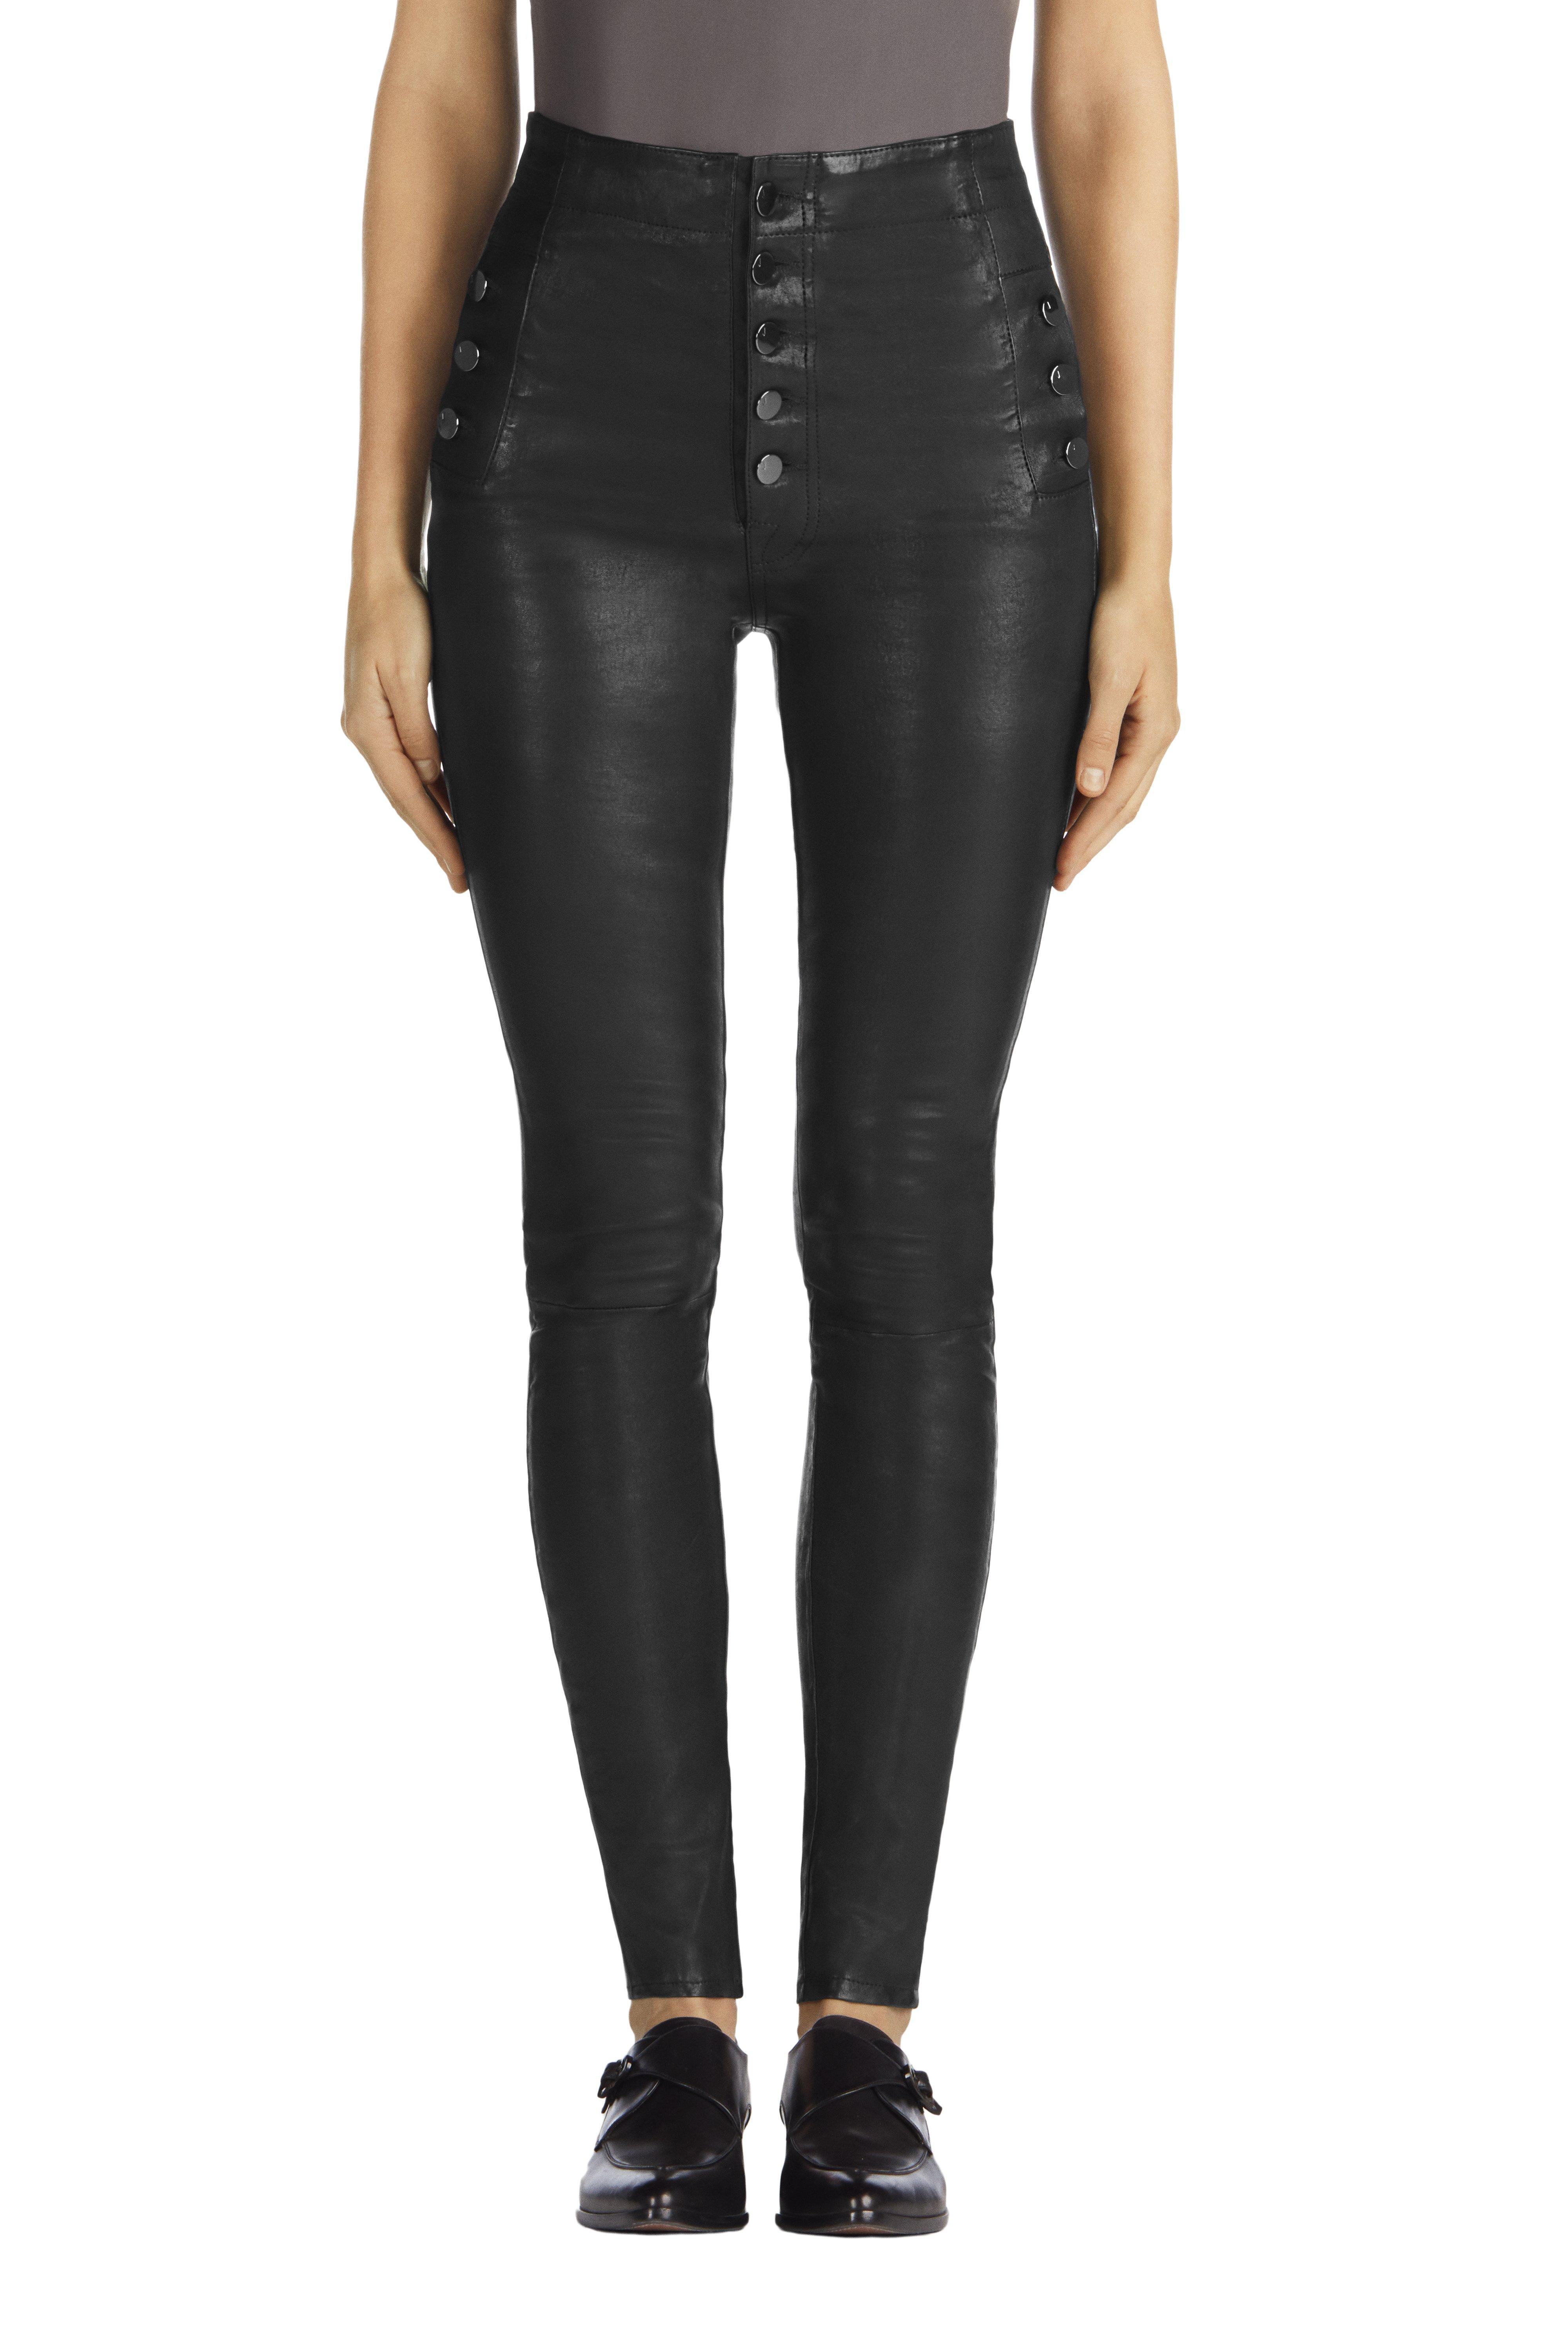 J Brand Natasha Sky High Skinny In Leather in Black - Lyst